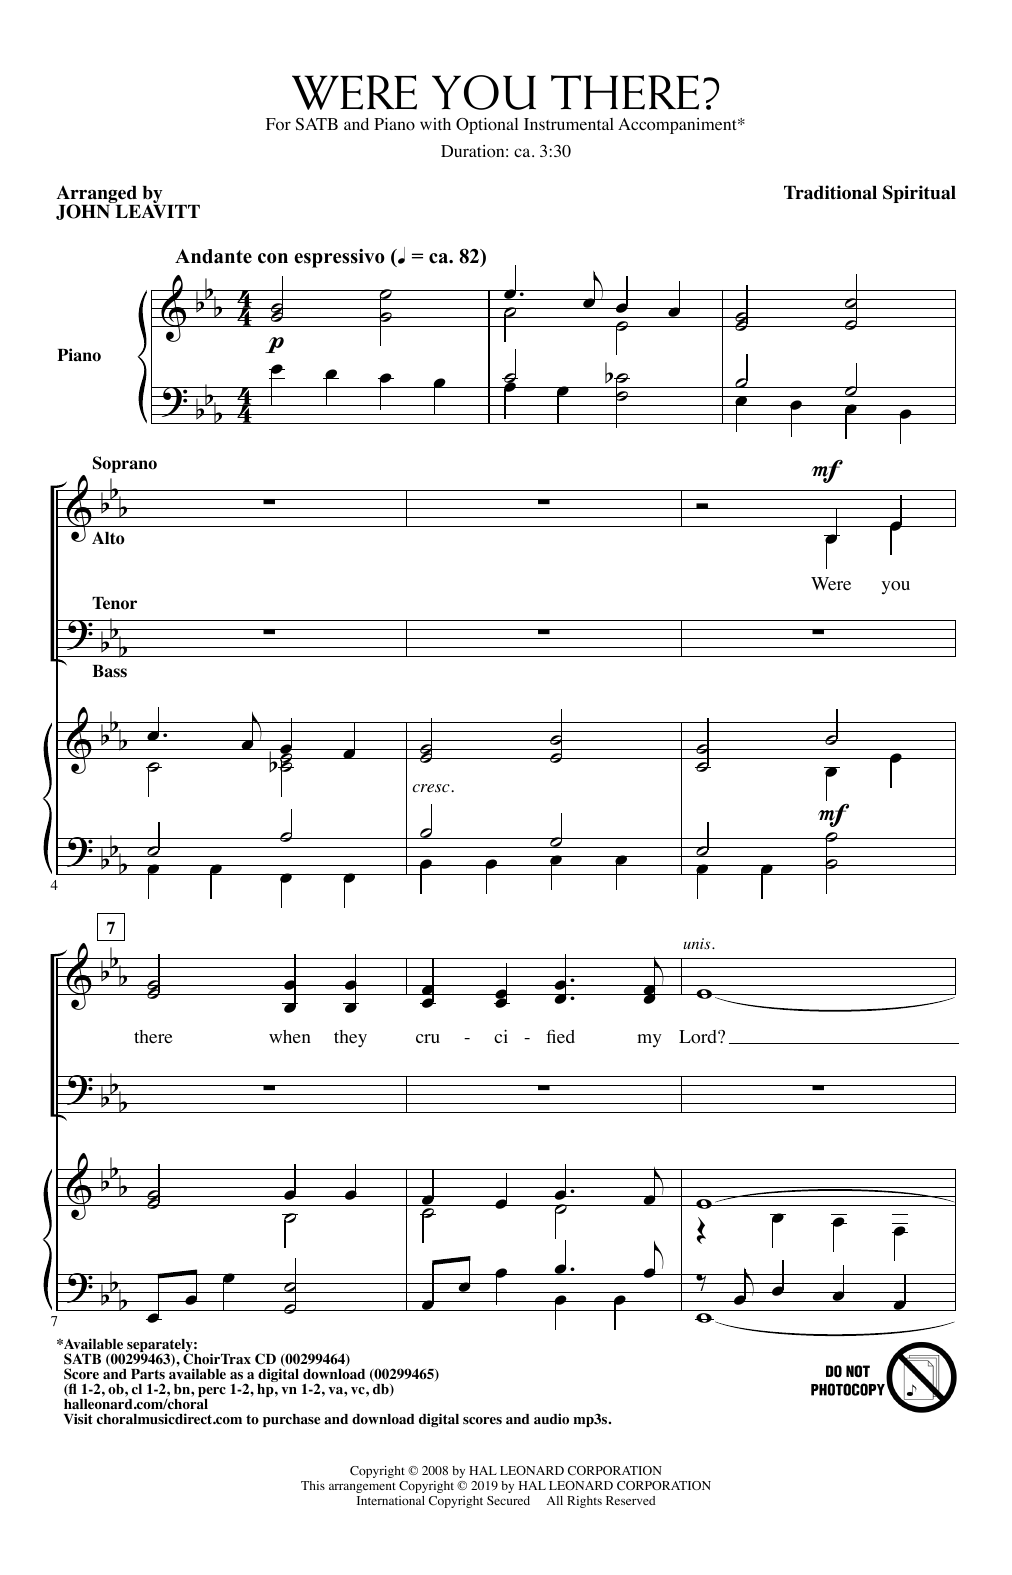 Traditional Spiritual Were You There? (arr. John Leavitt) Sheet Music Notes & Chords for SAB Choir - Download or Print PDF